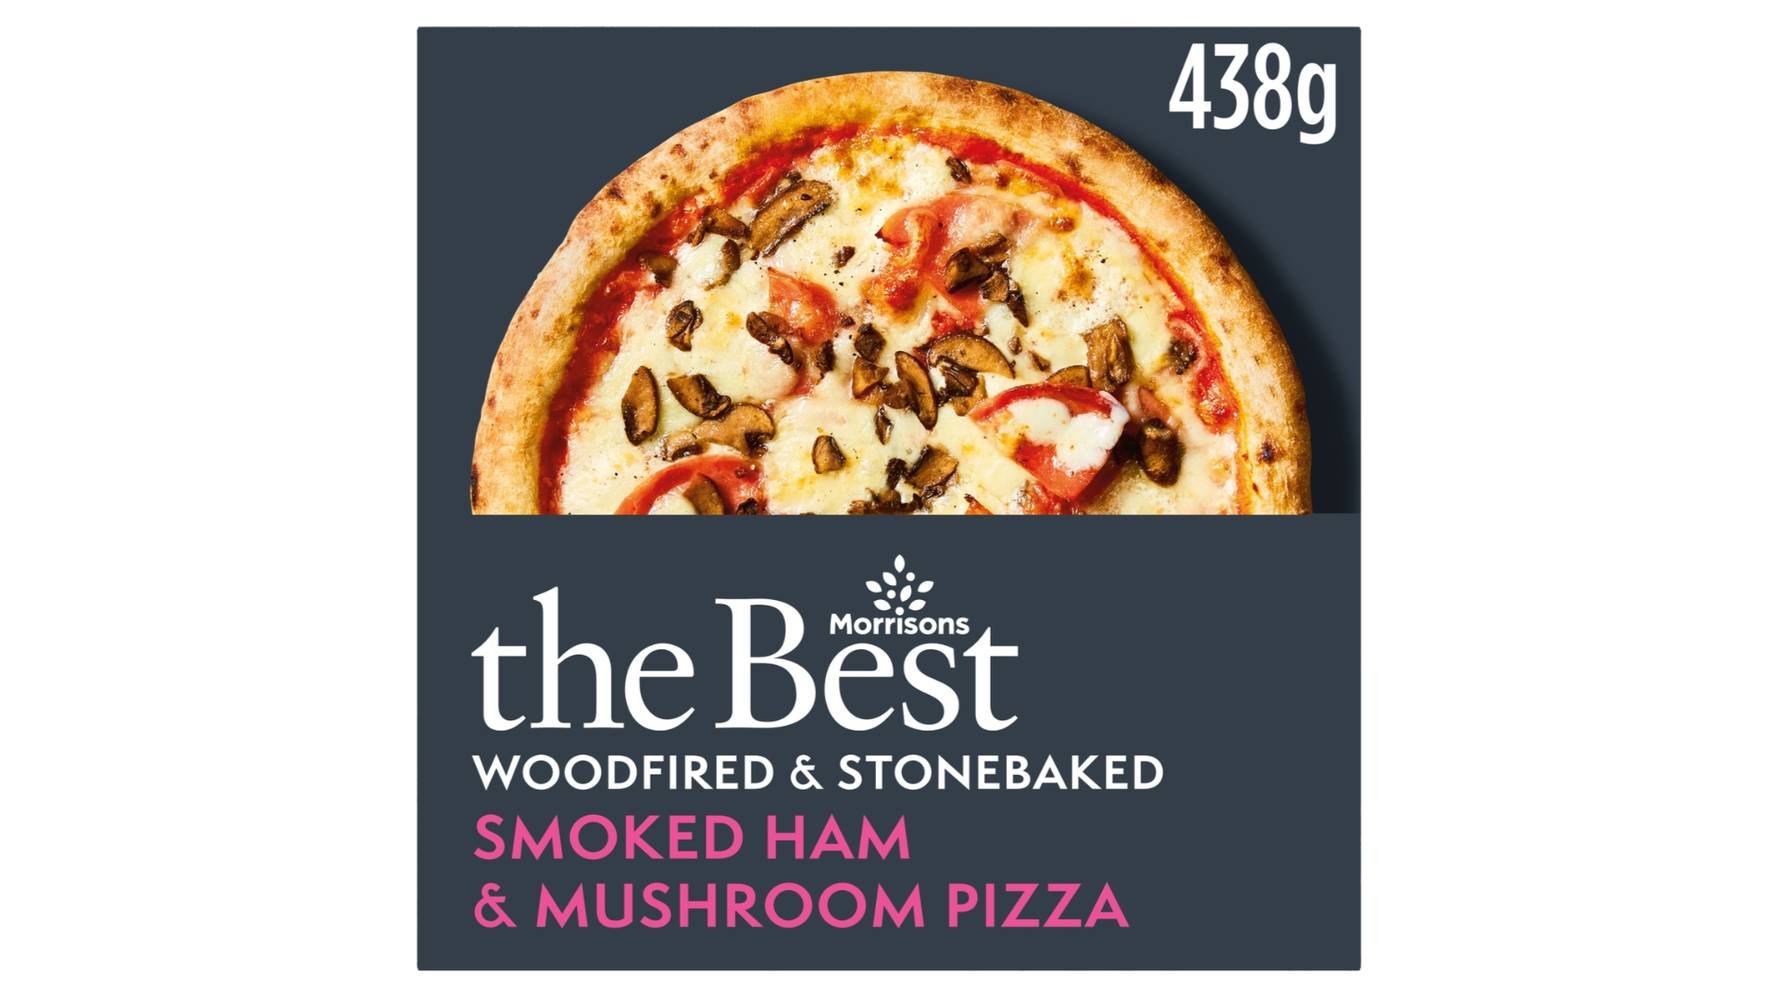 Morrisons the Best Smoked Ham & Mushroom Pizza